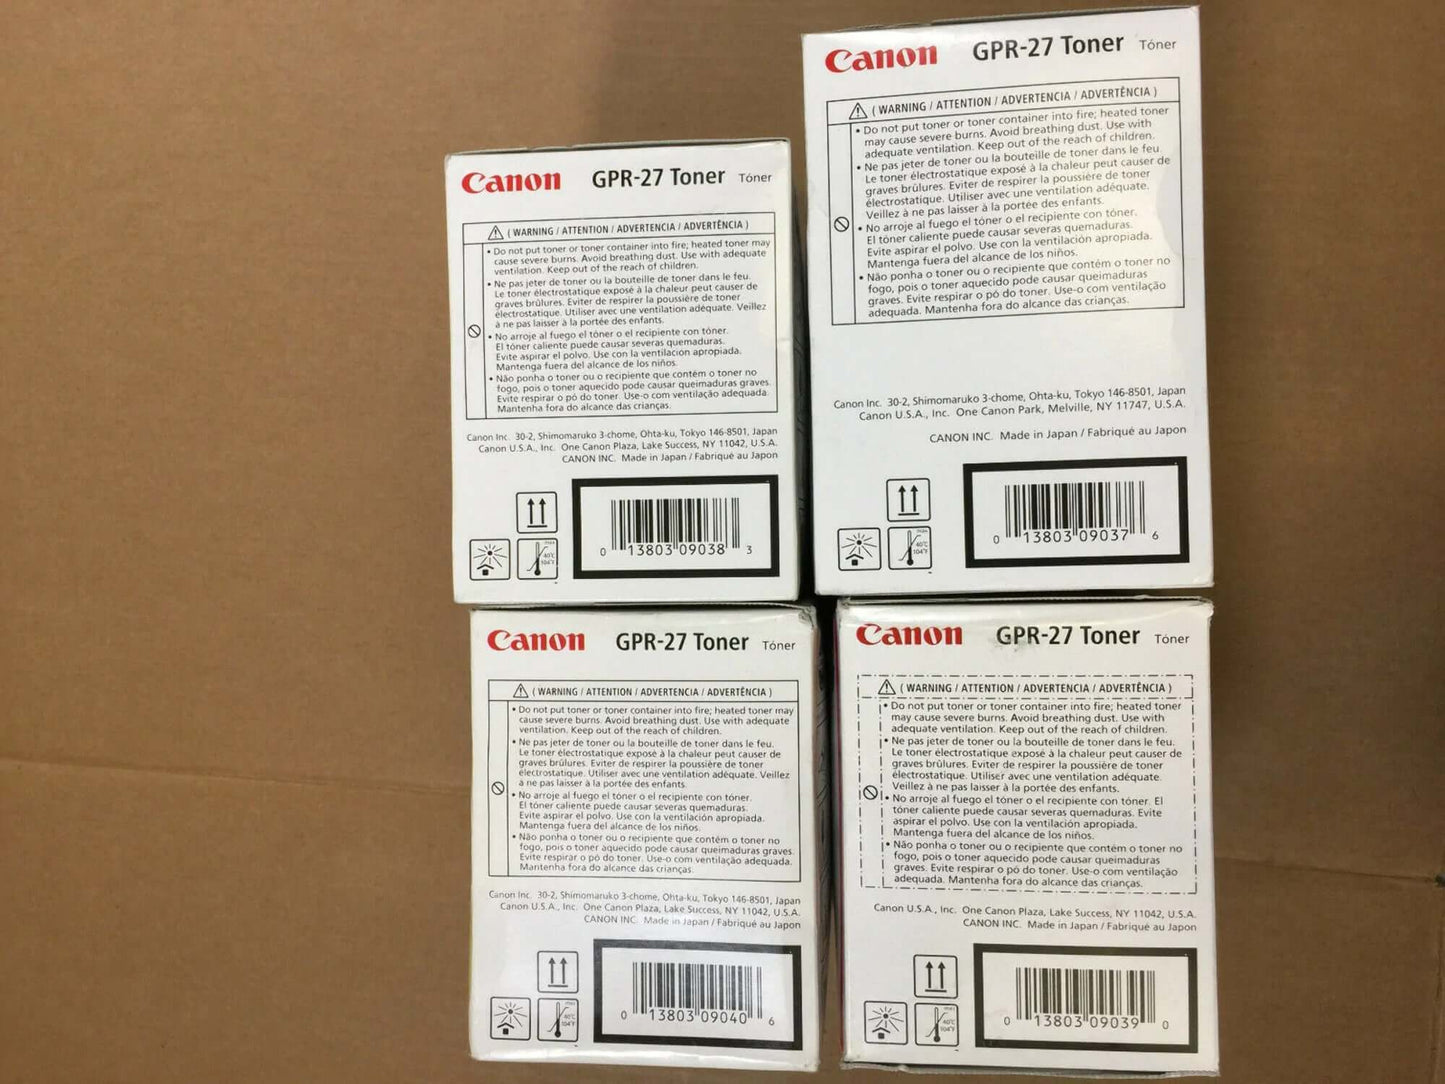 Canon GPR-27 toner color imagerunner LBP5970 - 5975 CMYK FedEx 2Day Air!! - copier-clearance-center